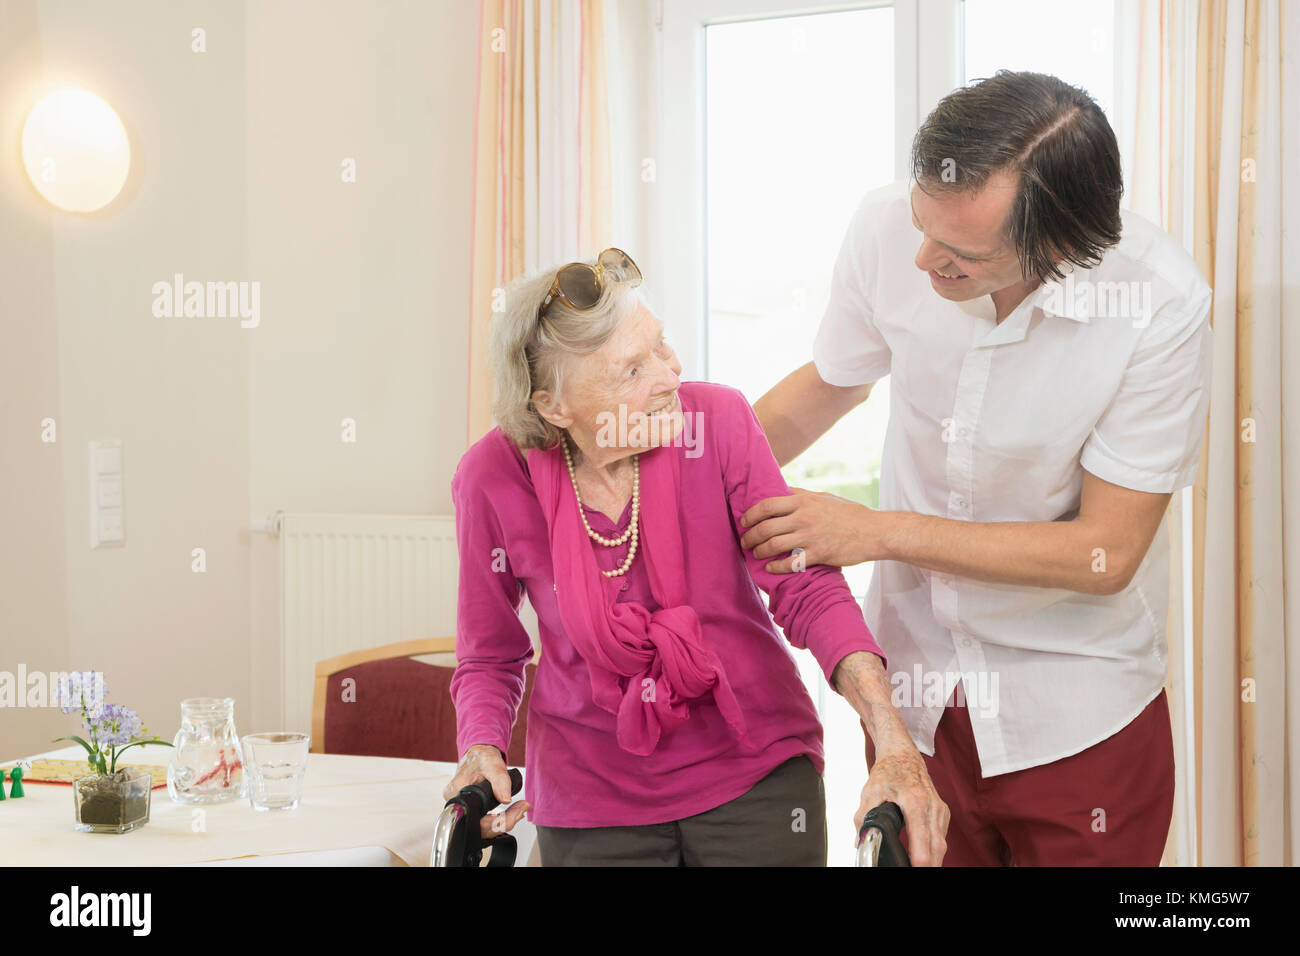 Caretaker helping senior woman using walker Stock Photo